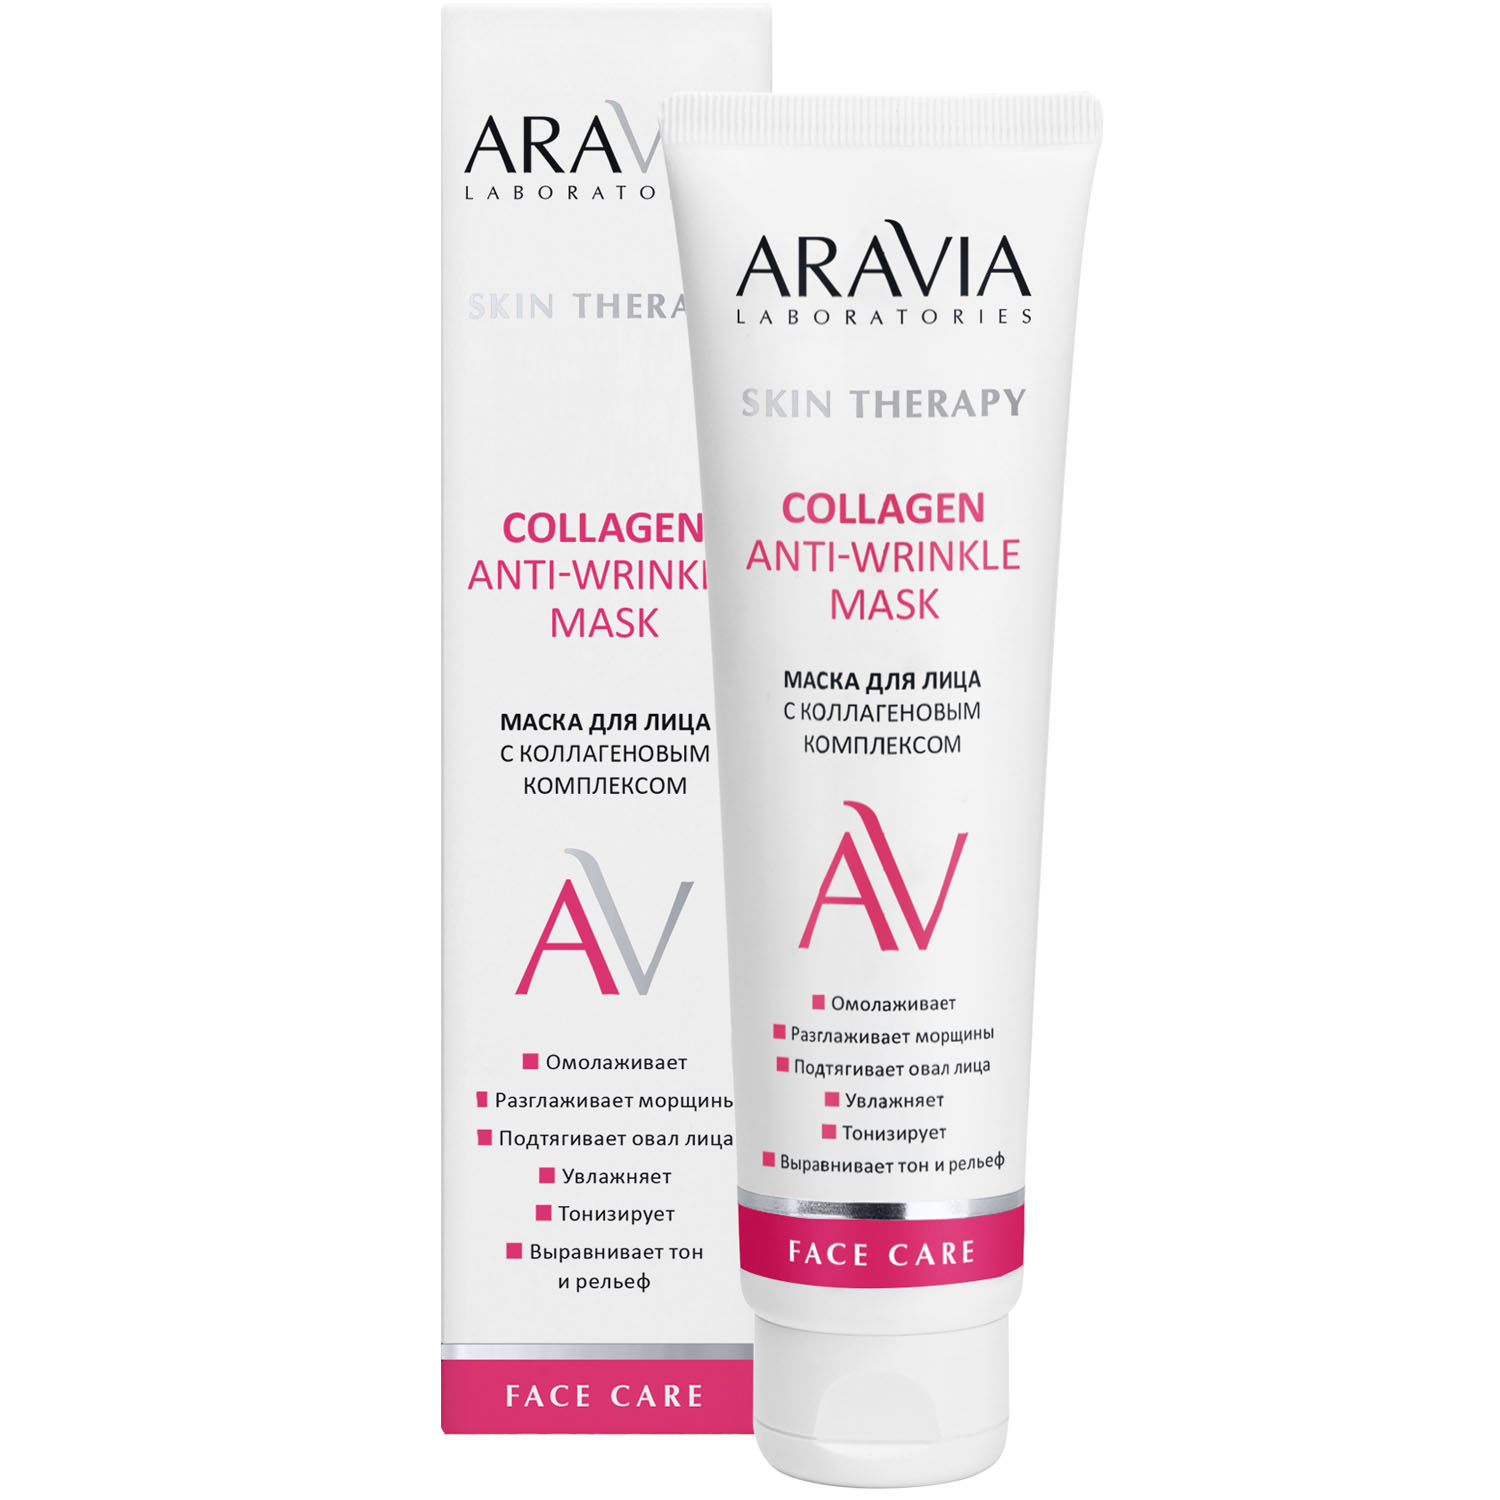 цена Aravia Laboratories Маска для лица с коллагеновым комплексом Collagen Anti-wrinkle Mask, 100 мл (Aravia Laboratories, Уход за лицом)